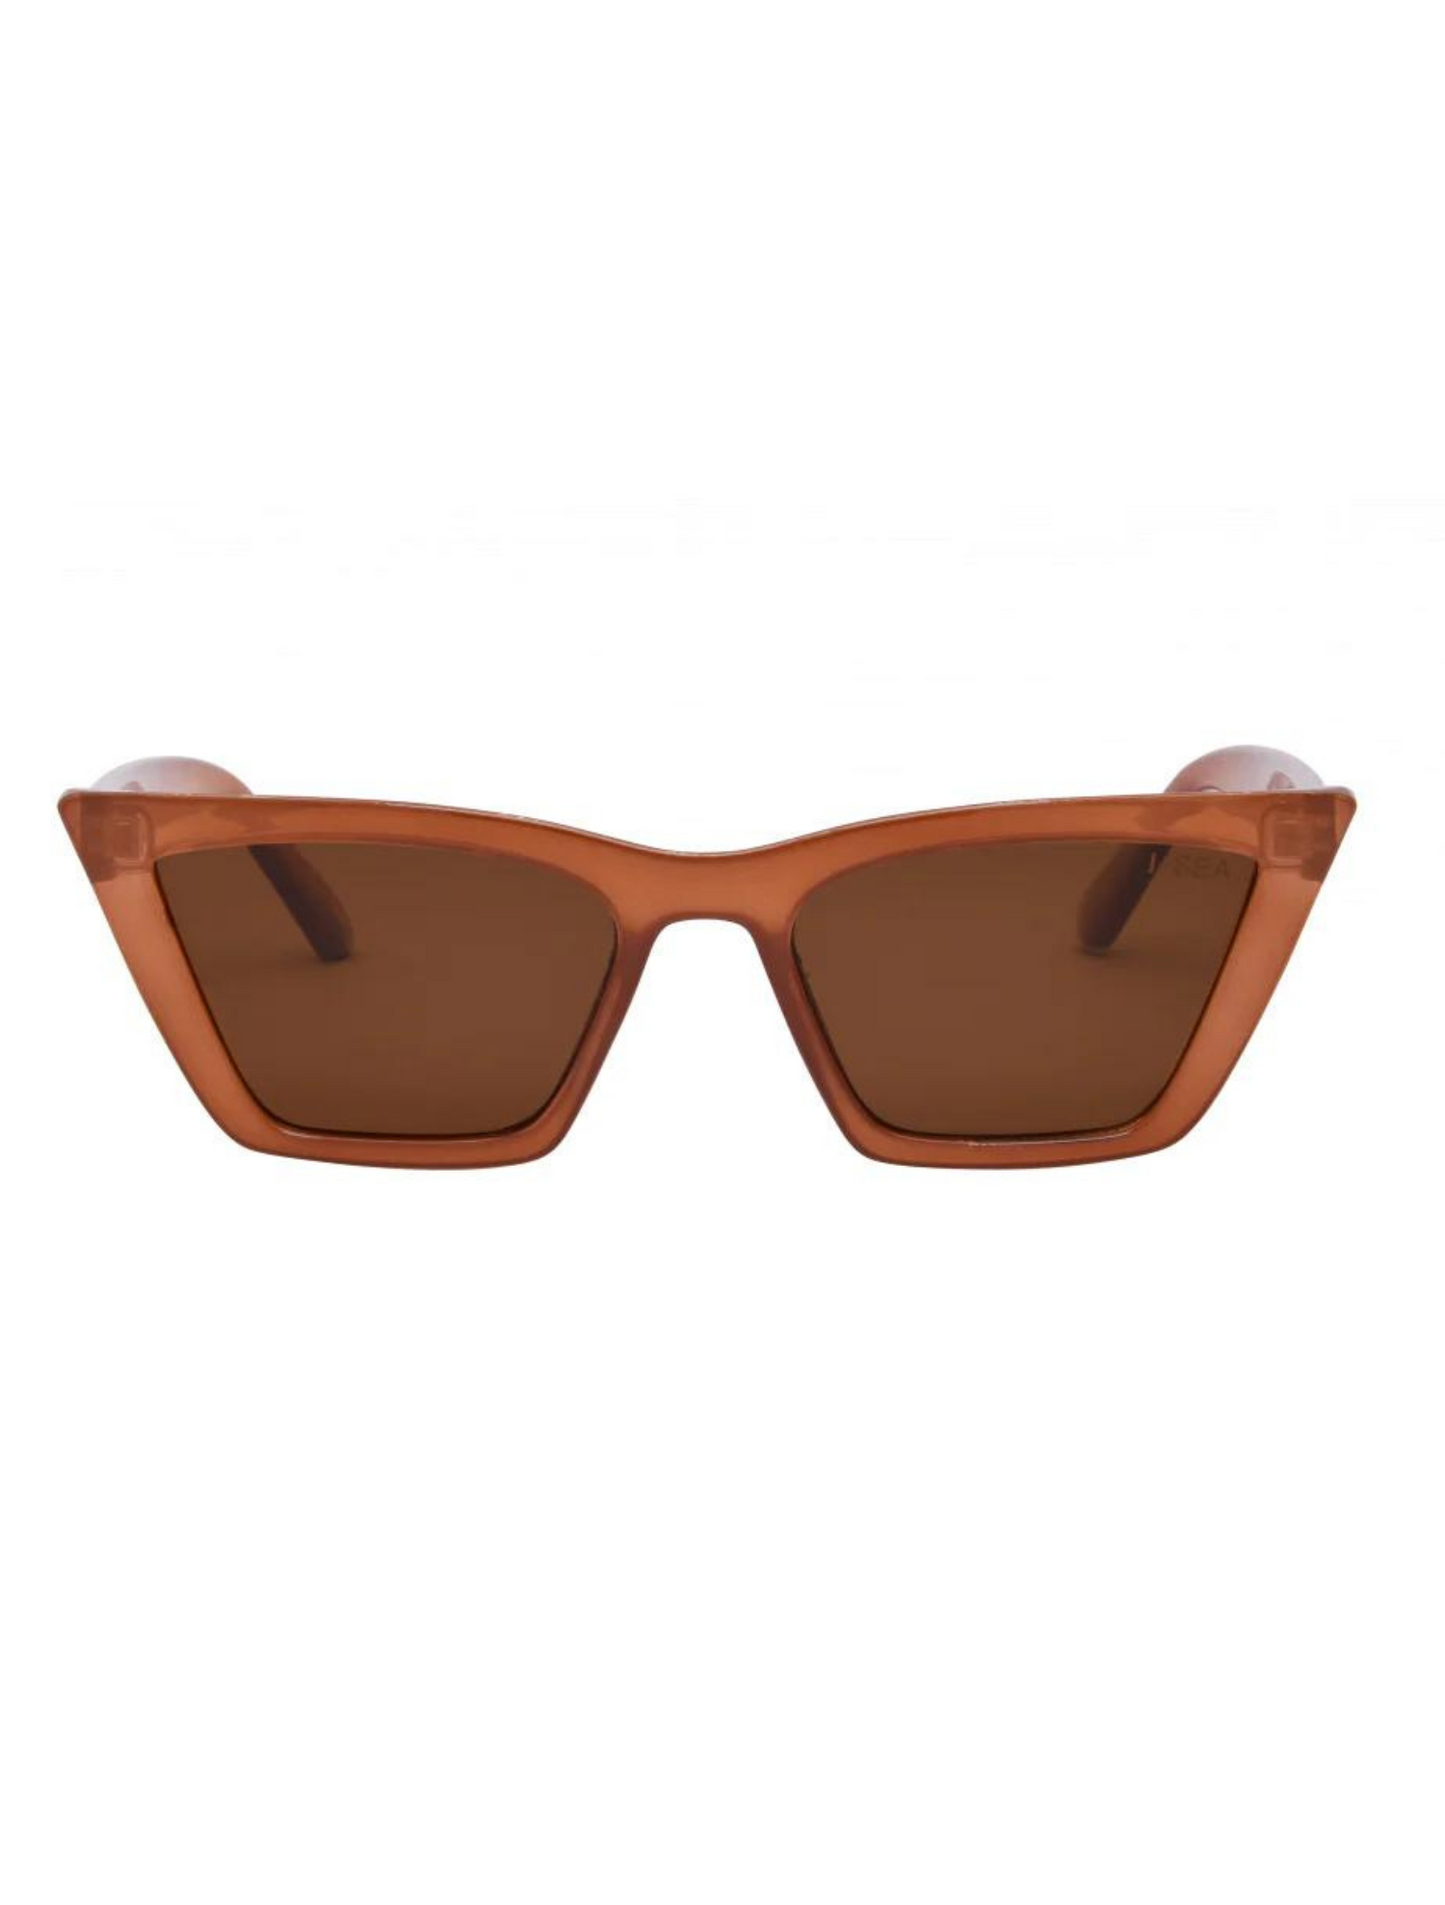 Rosey Sunglasses - Coffee/Brown